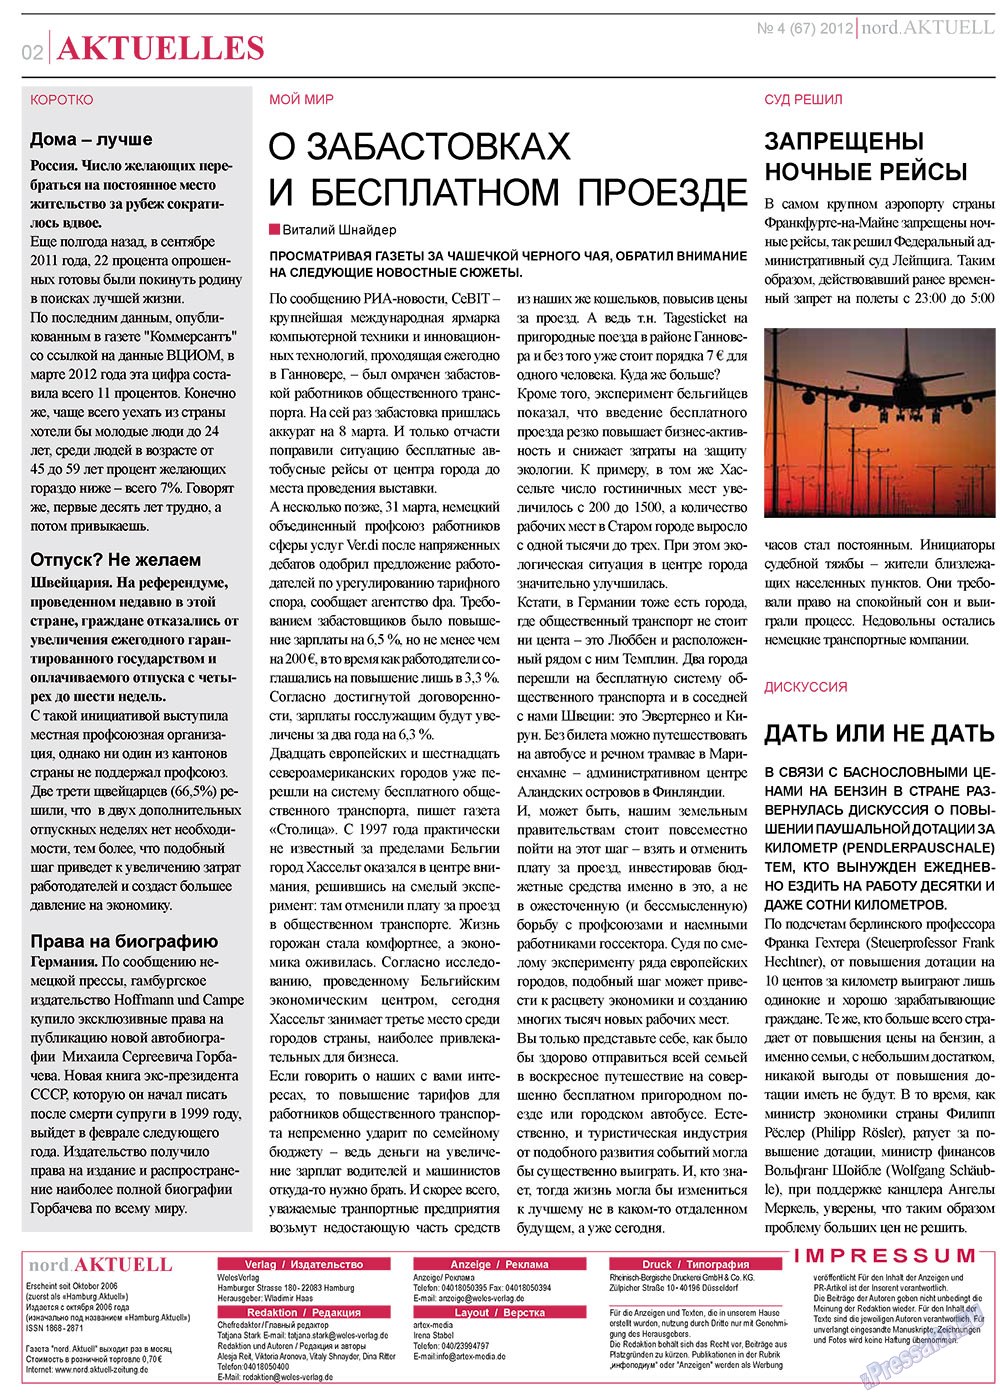 nord.Aktuell, газета. 2012 №4 стр.2